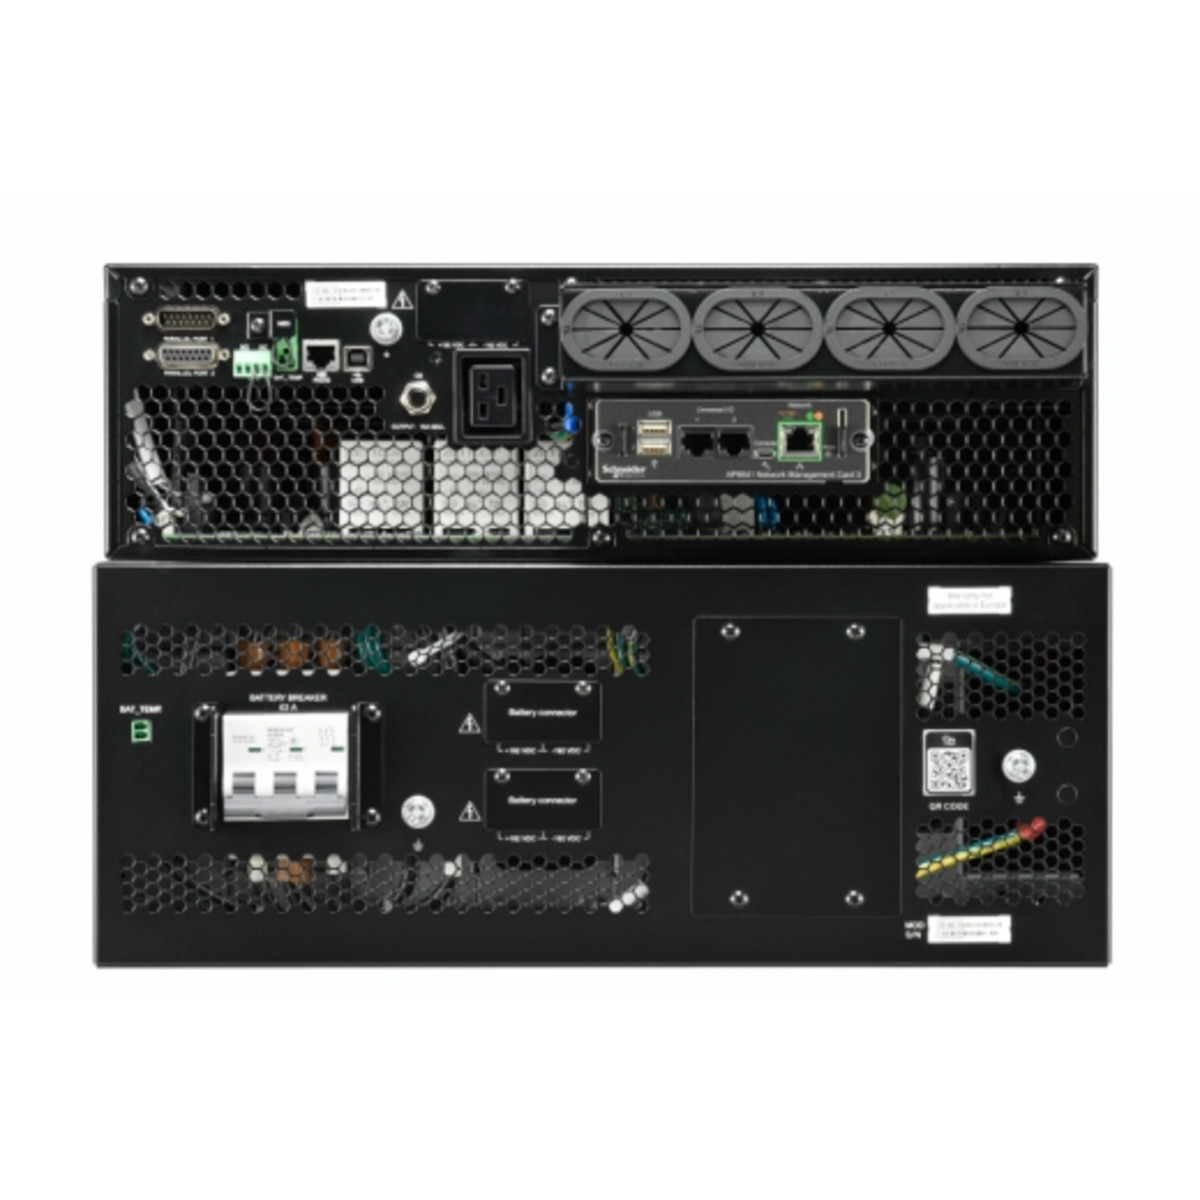 Smart-UPS RT 15kVA 230V (Add SRTGRK1 RM)